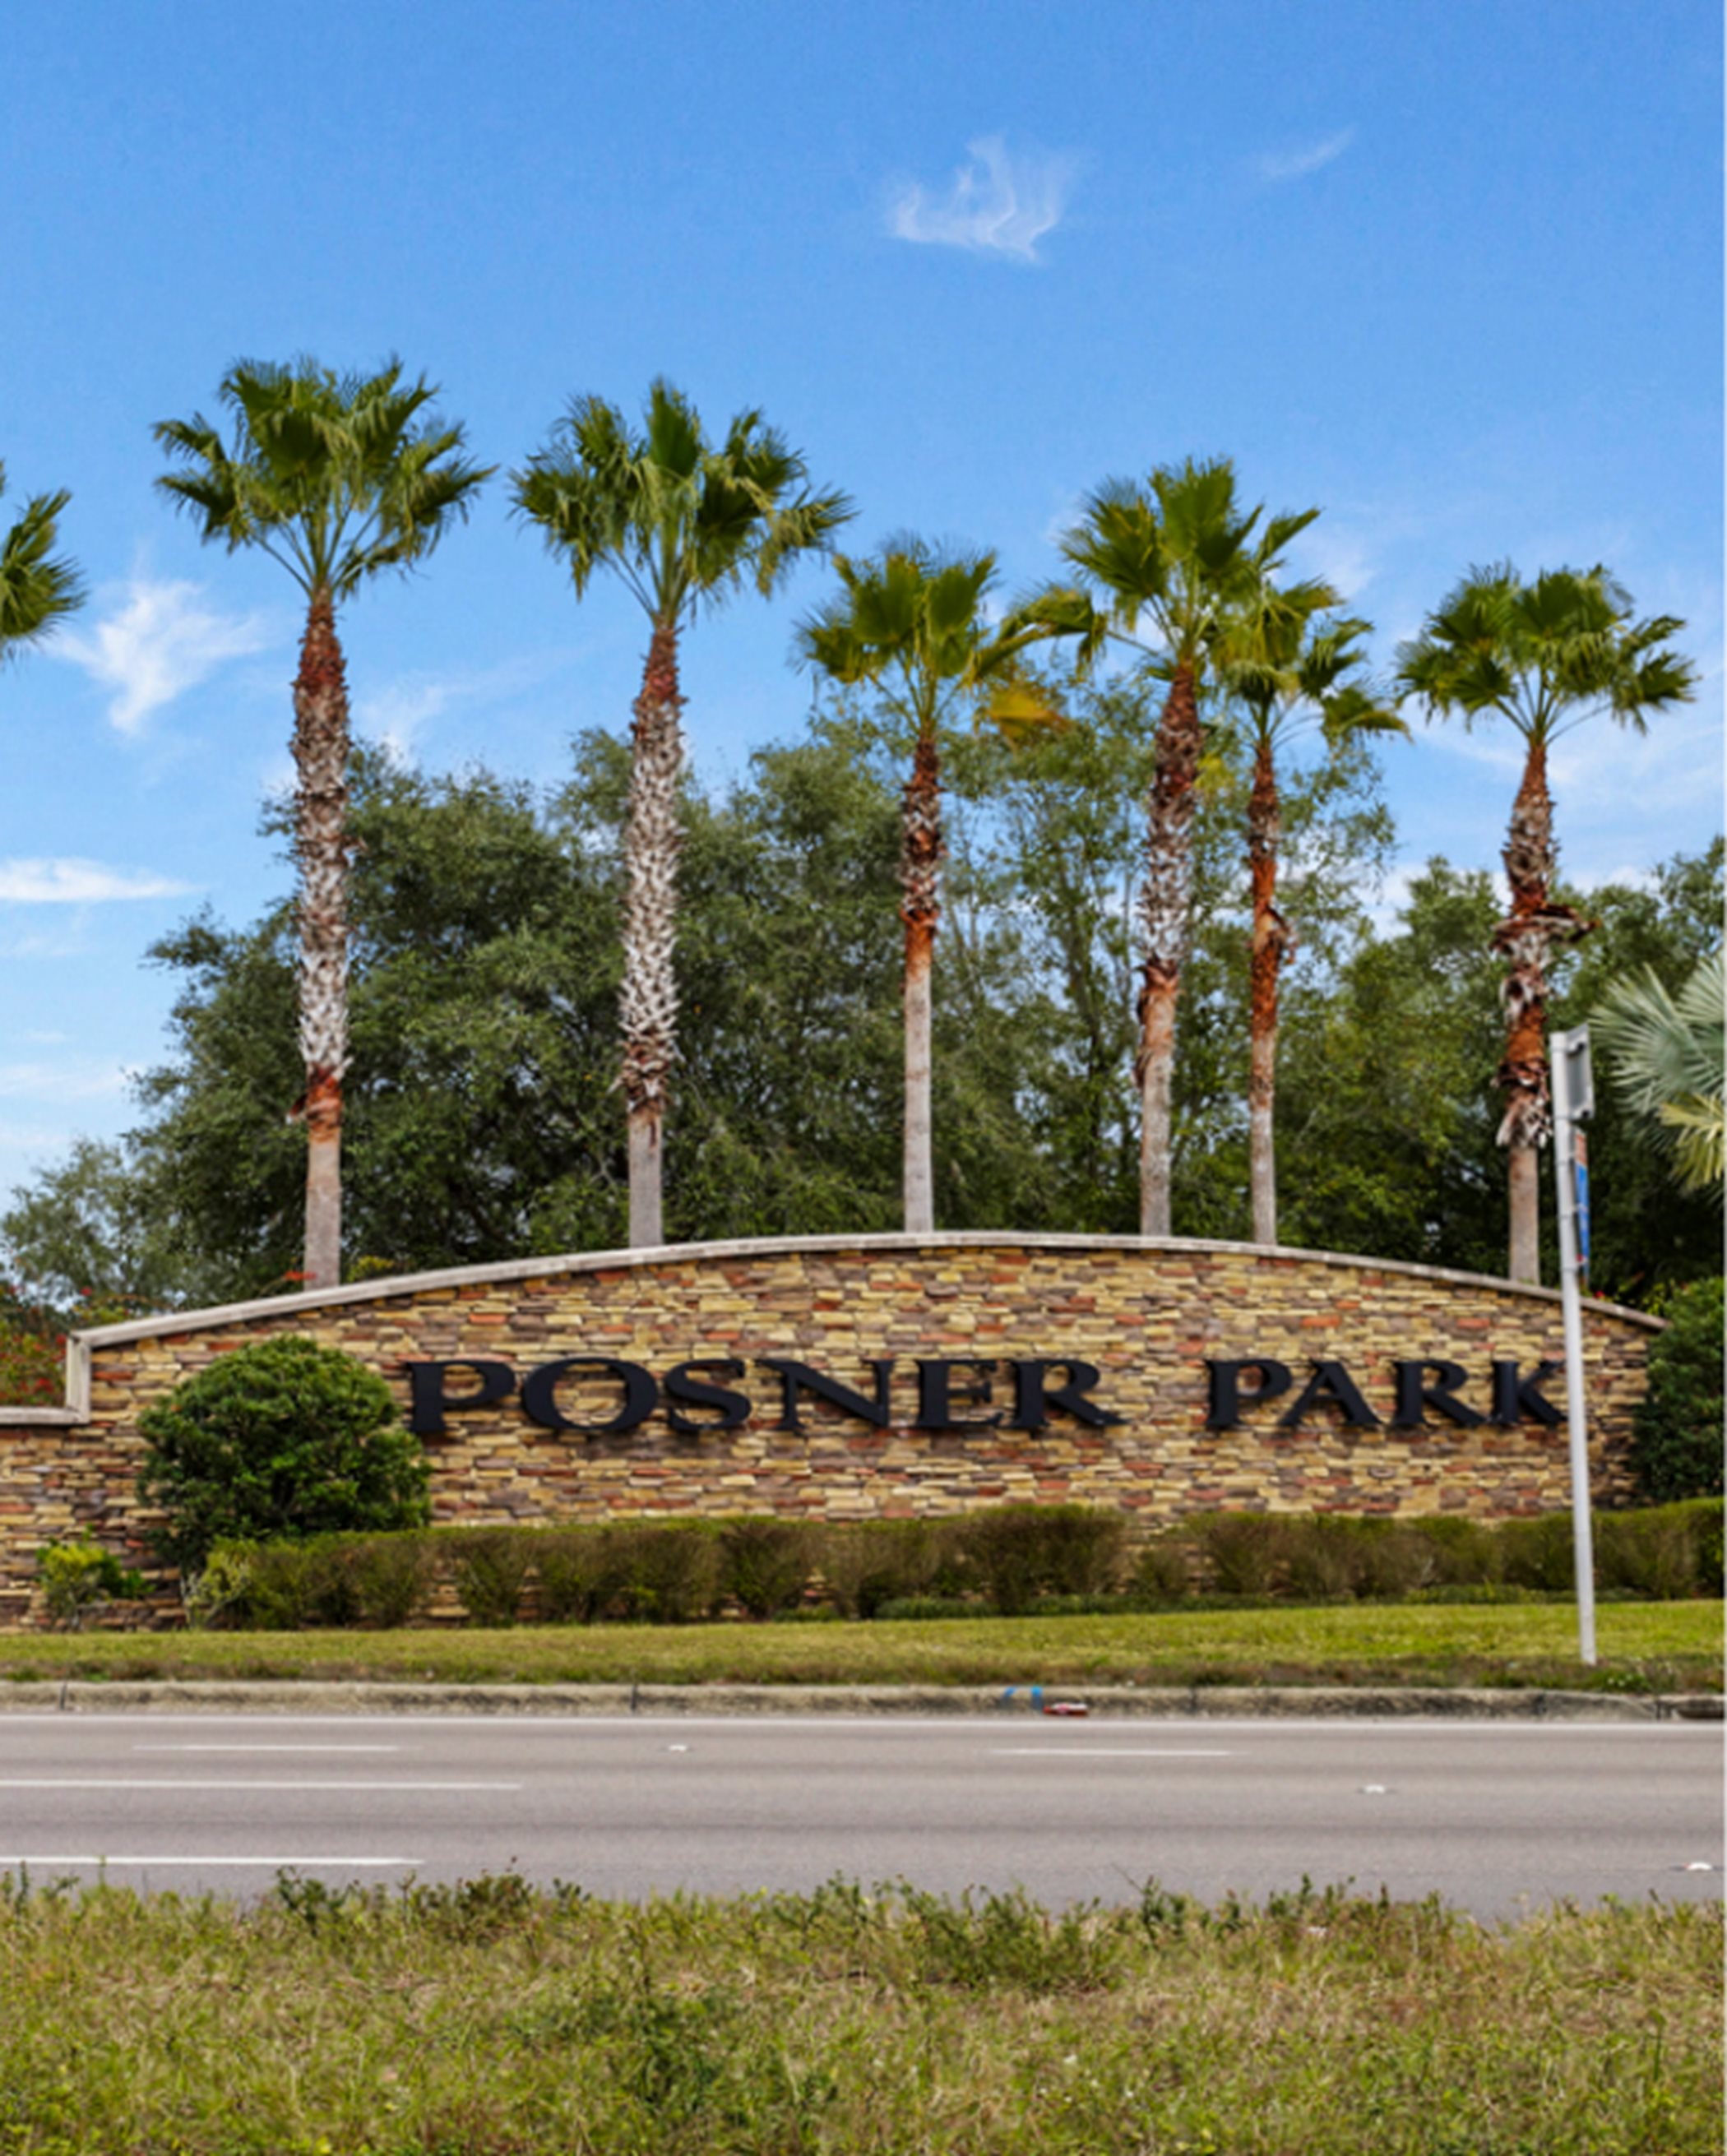 Posner Park monument